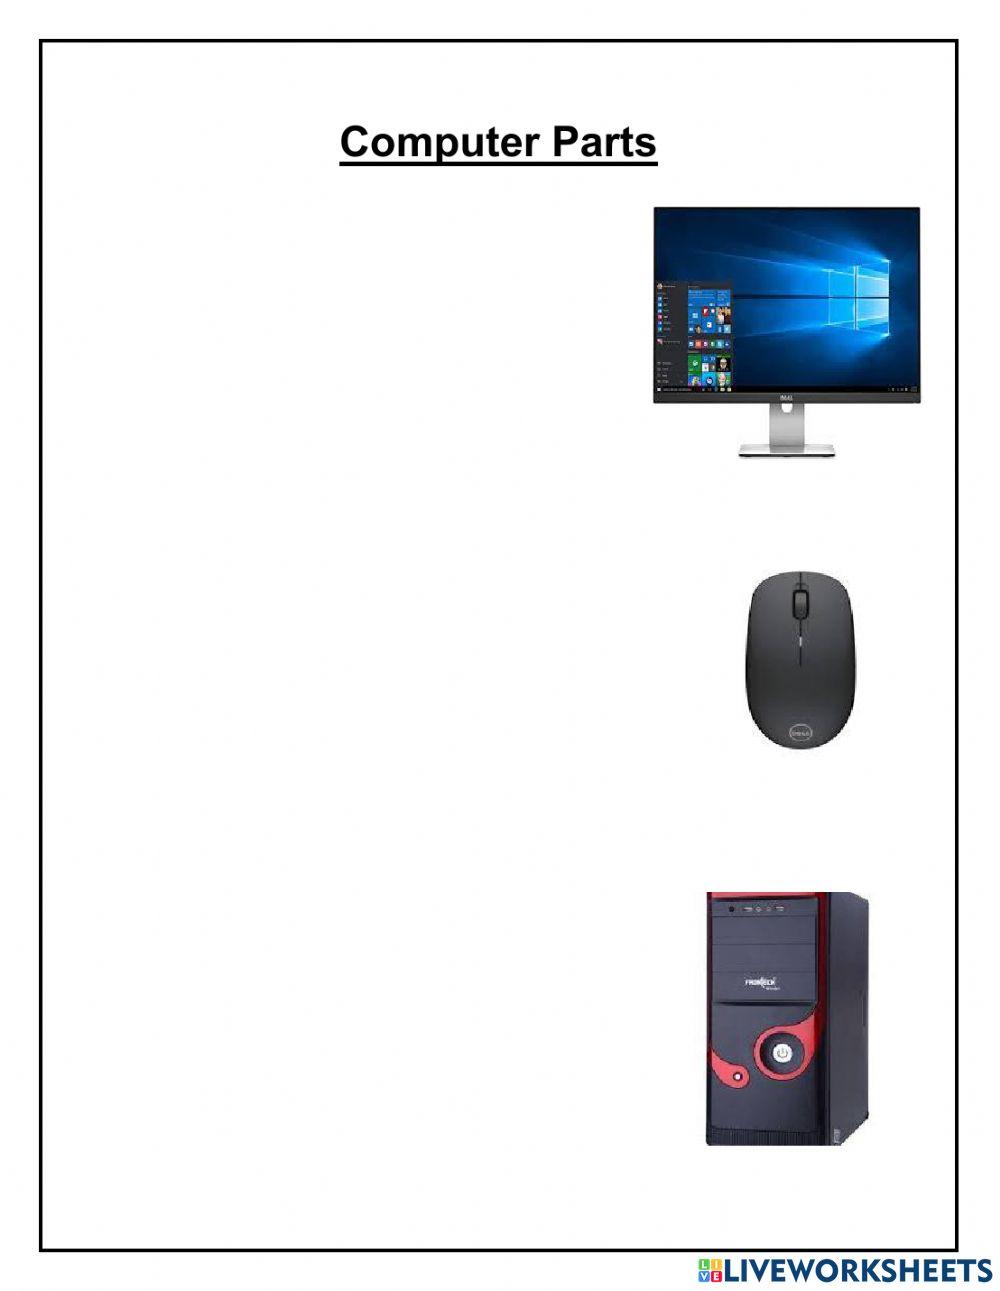 Computer part